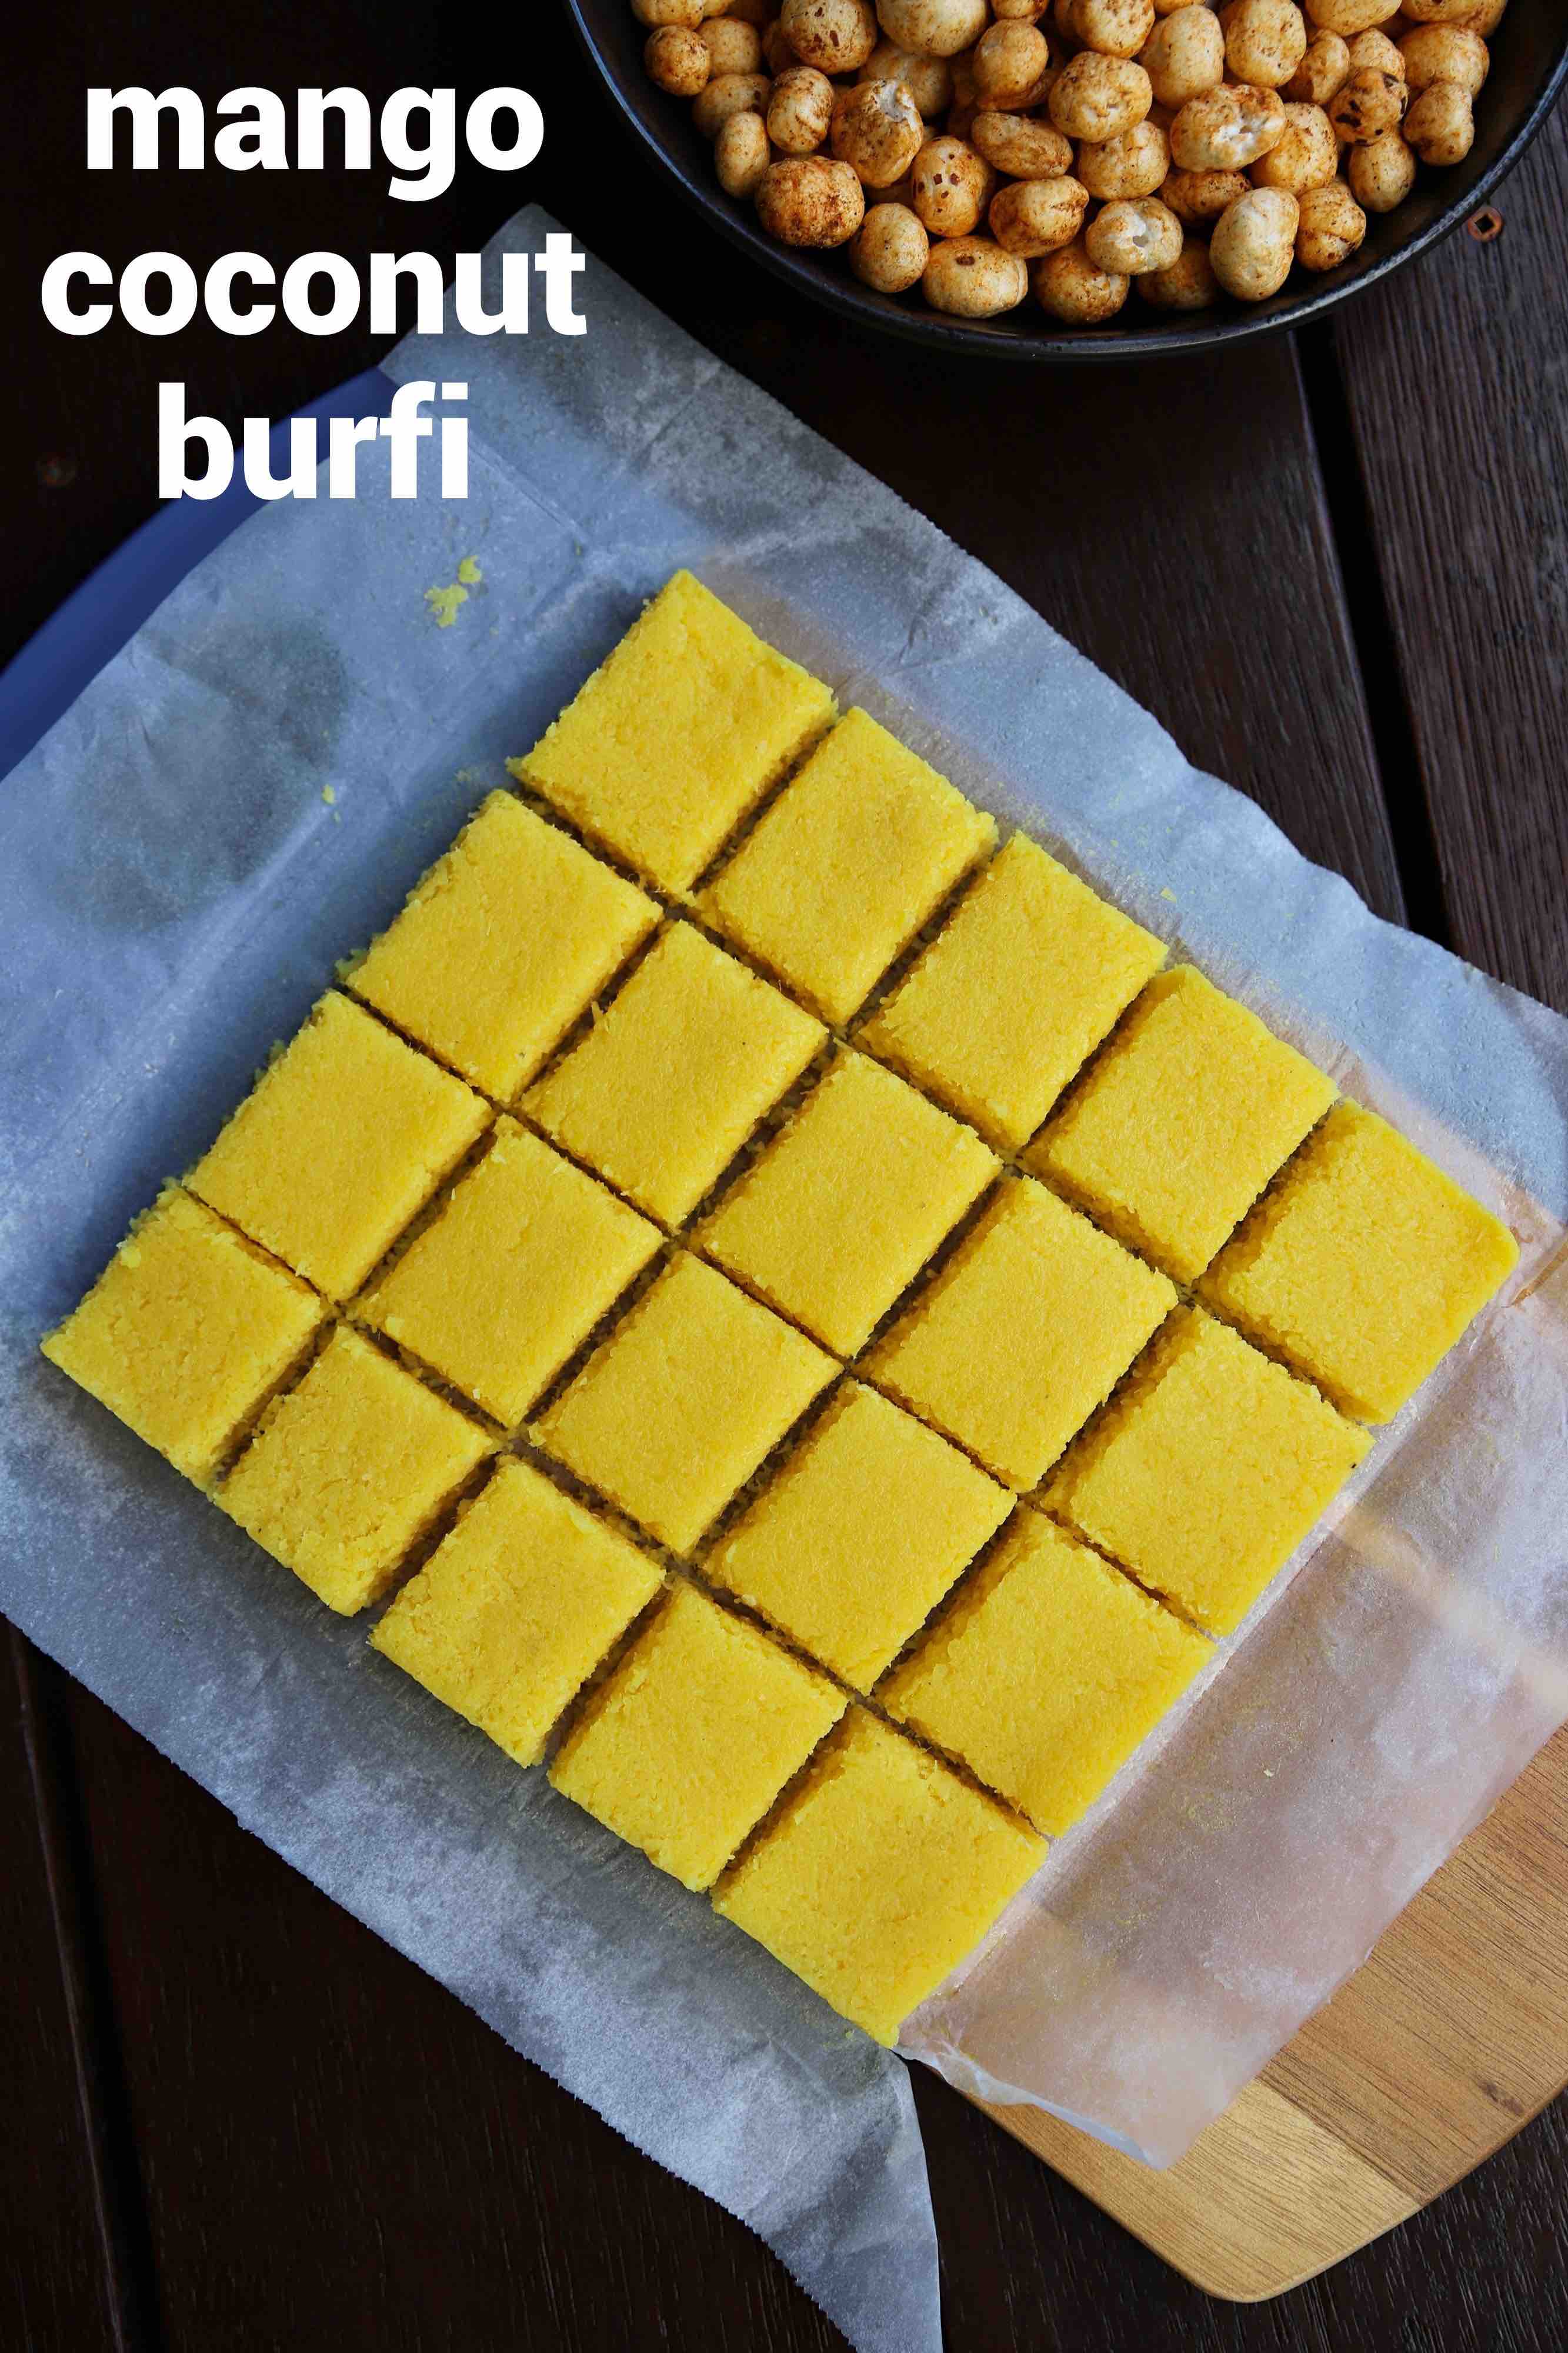 mango burfi recipe | mango barfi | mango coconut burfi recipe